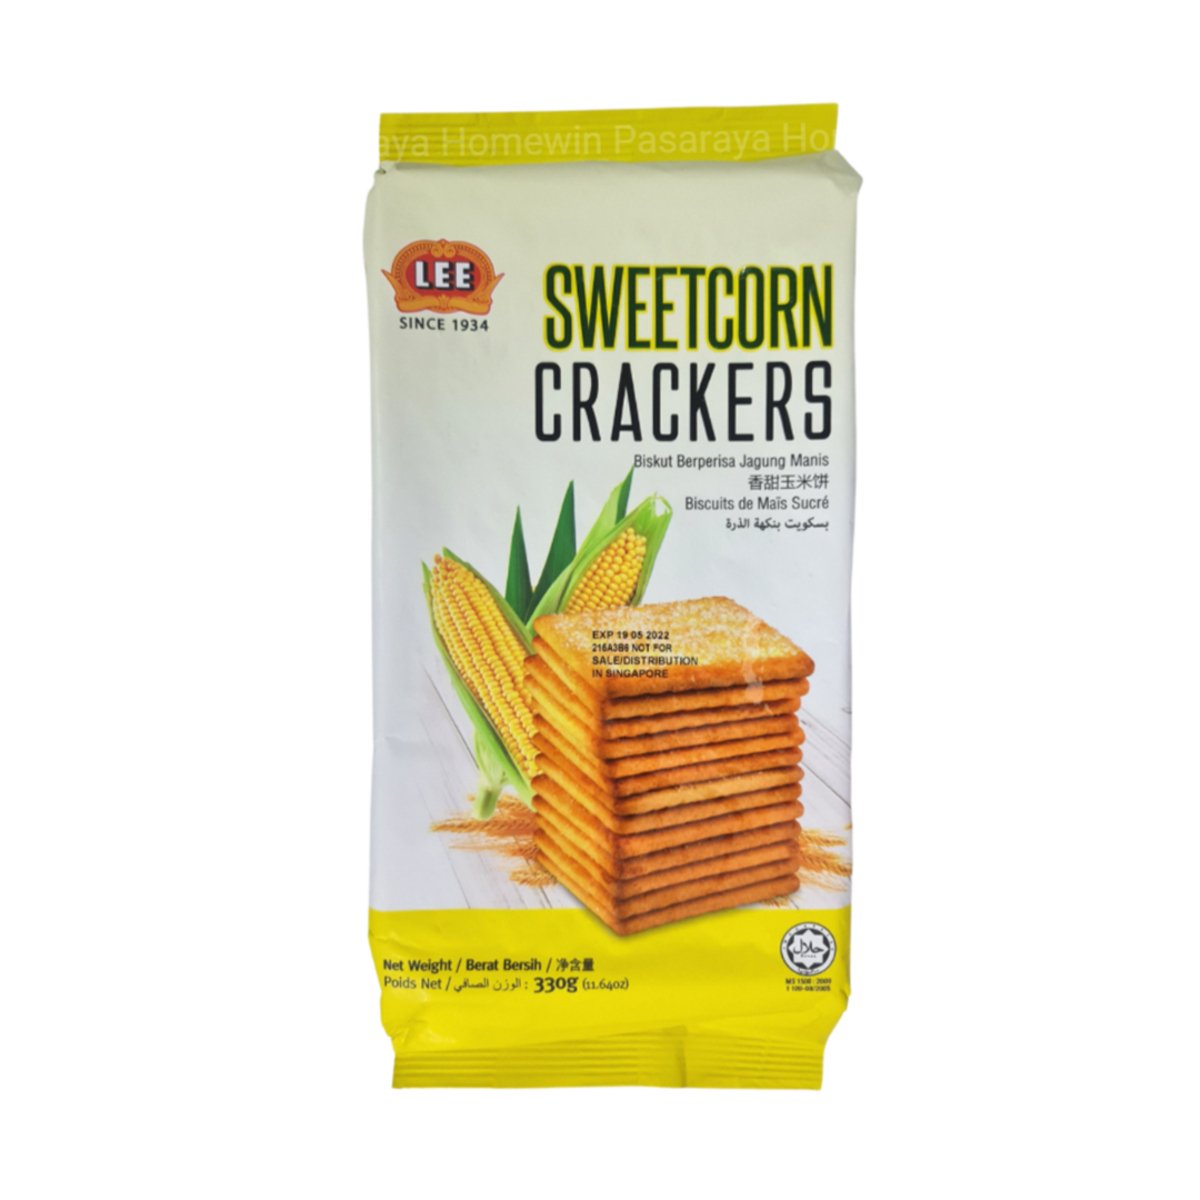 Lee Sweetcorn Cracker 330g